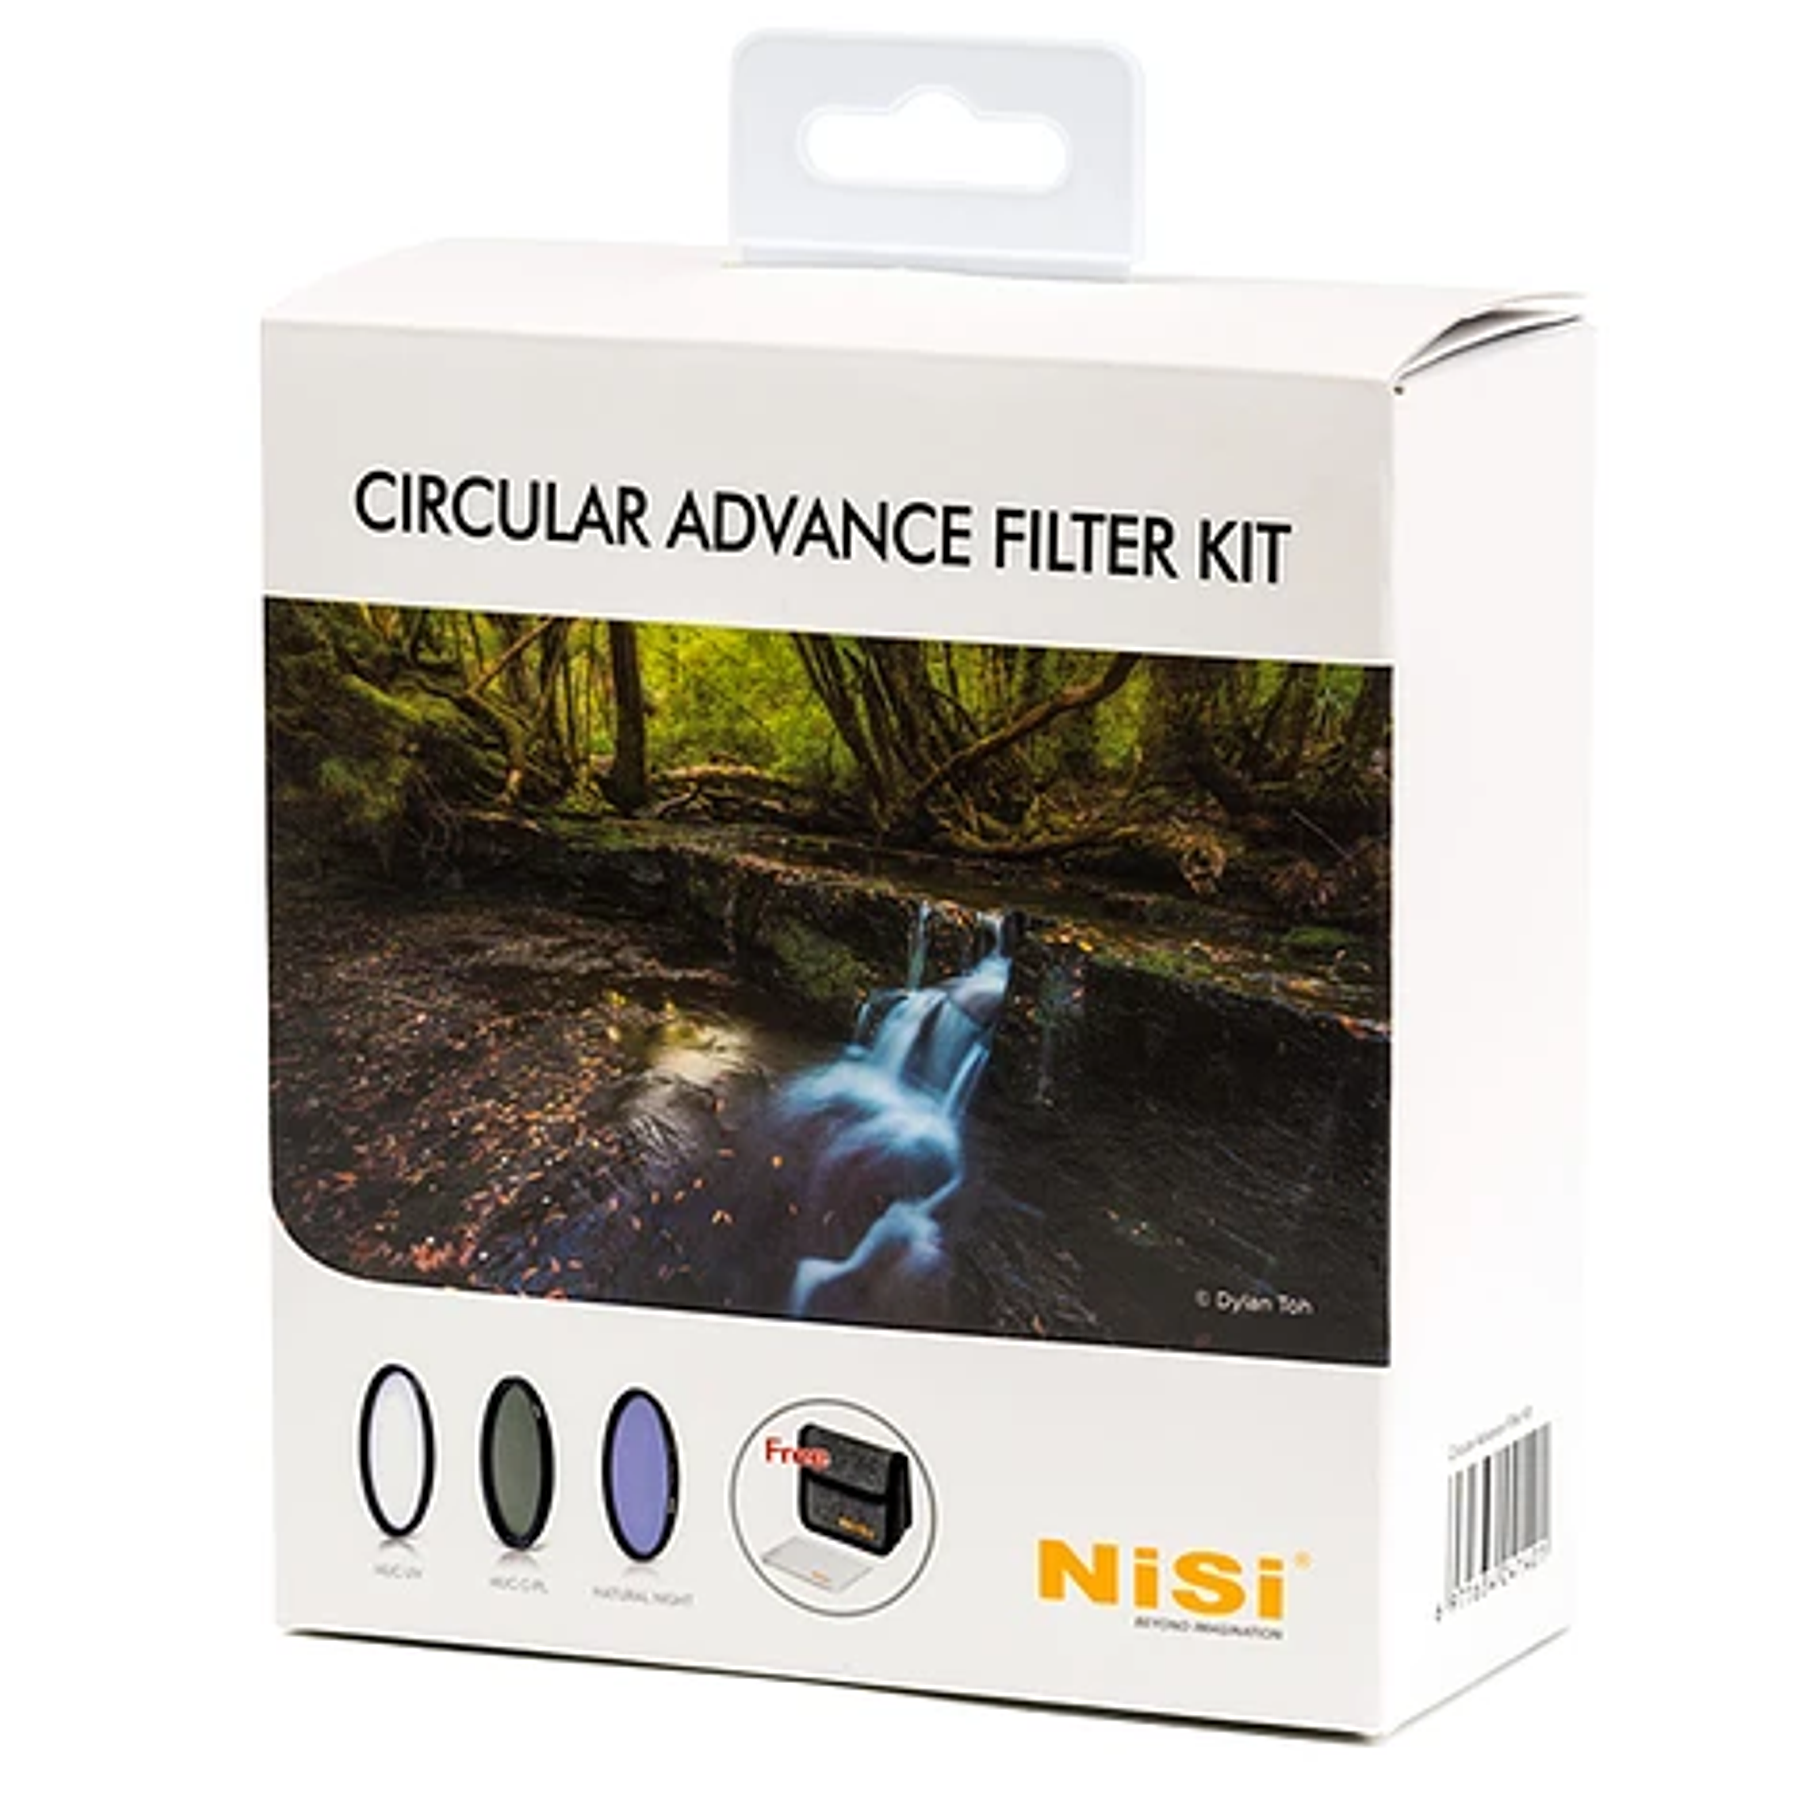 Filtro Circular Advance Filter Kit